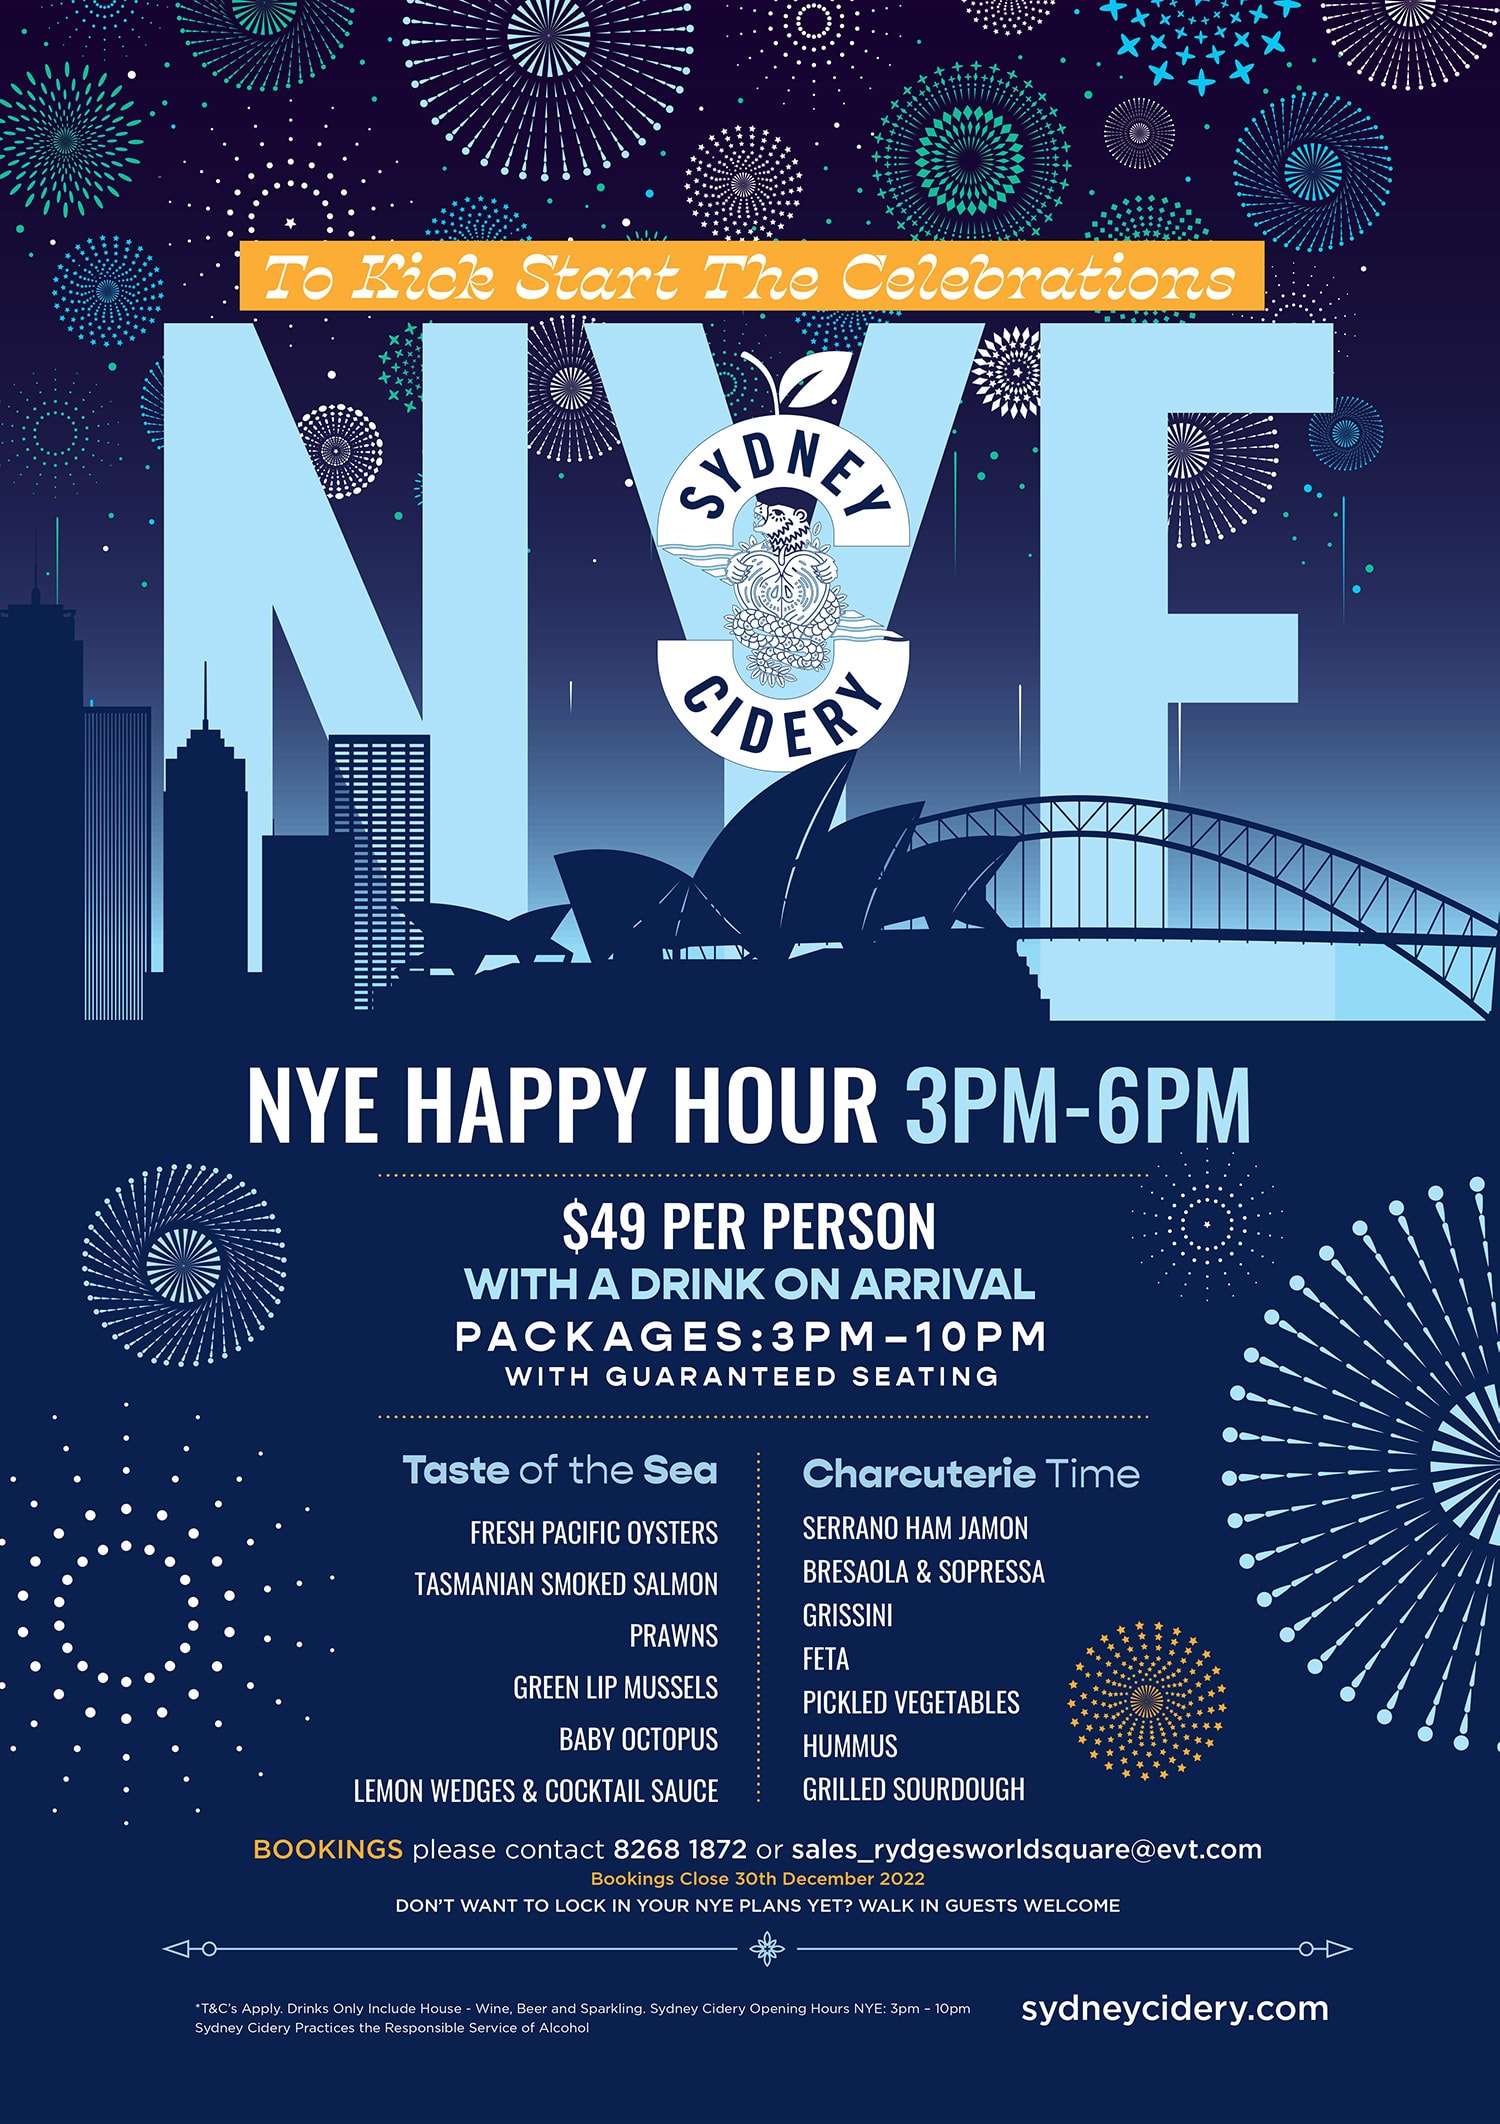 Sydney Cidery New Years